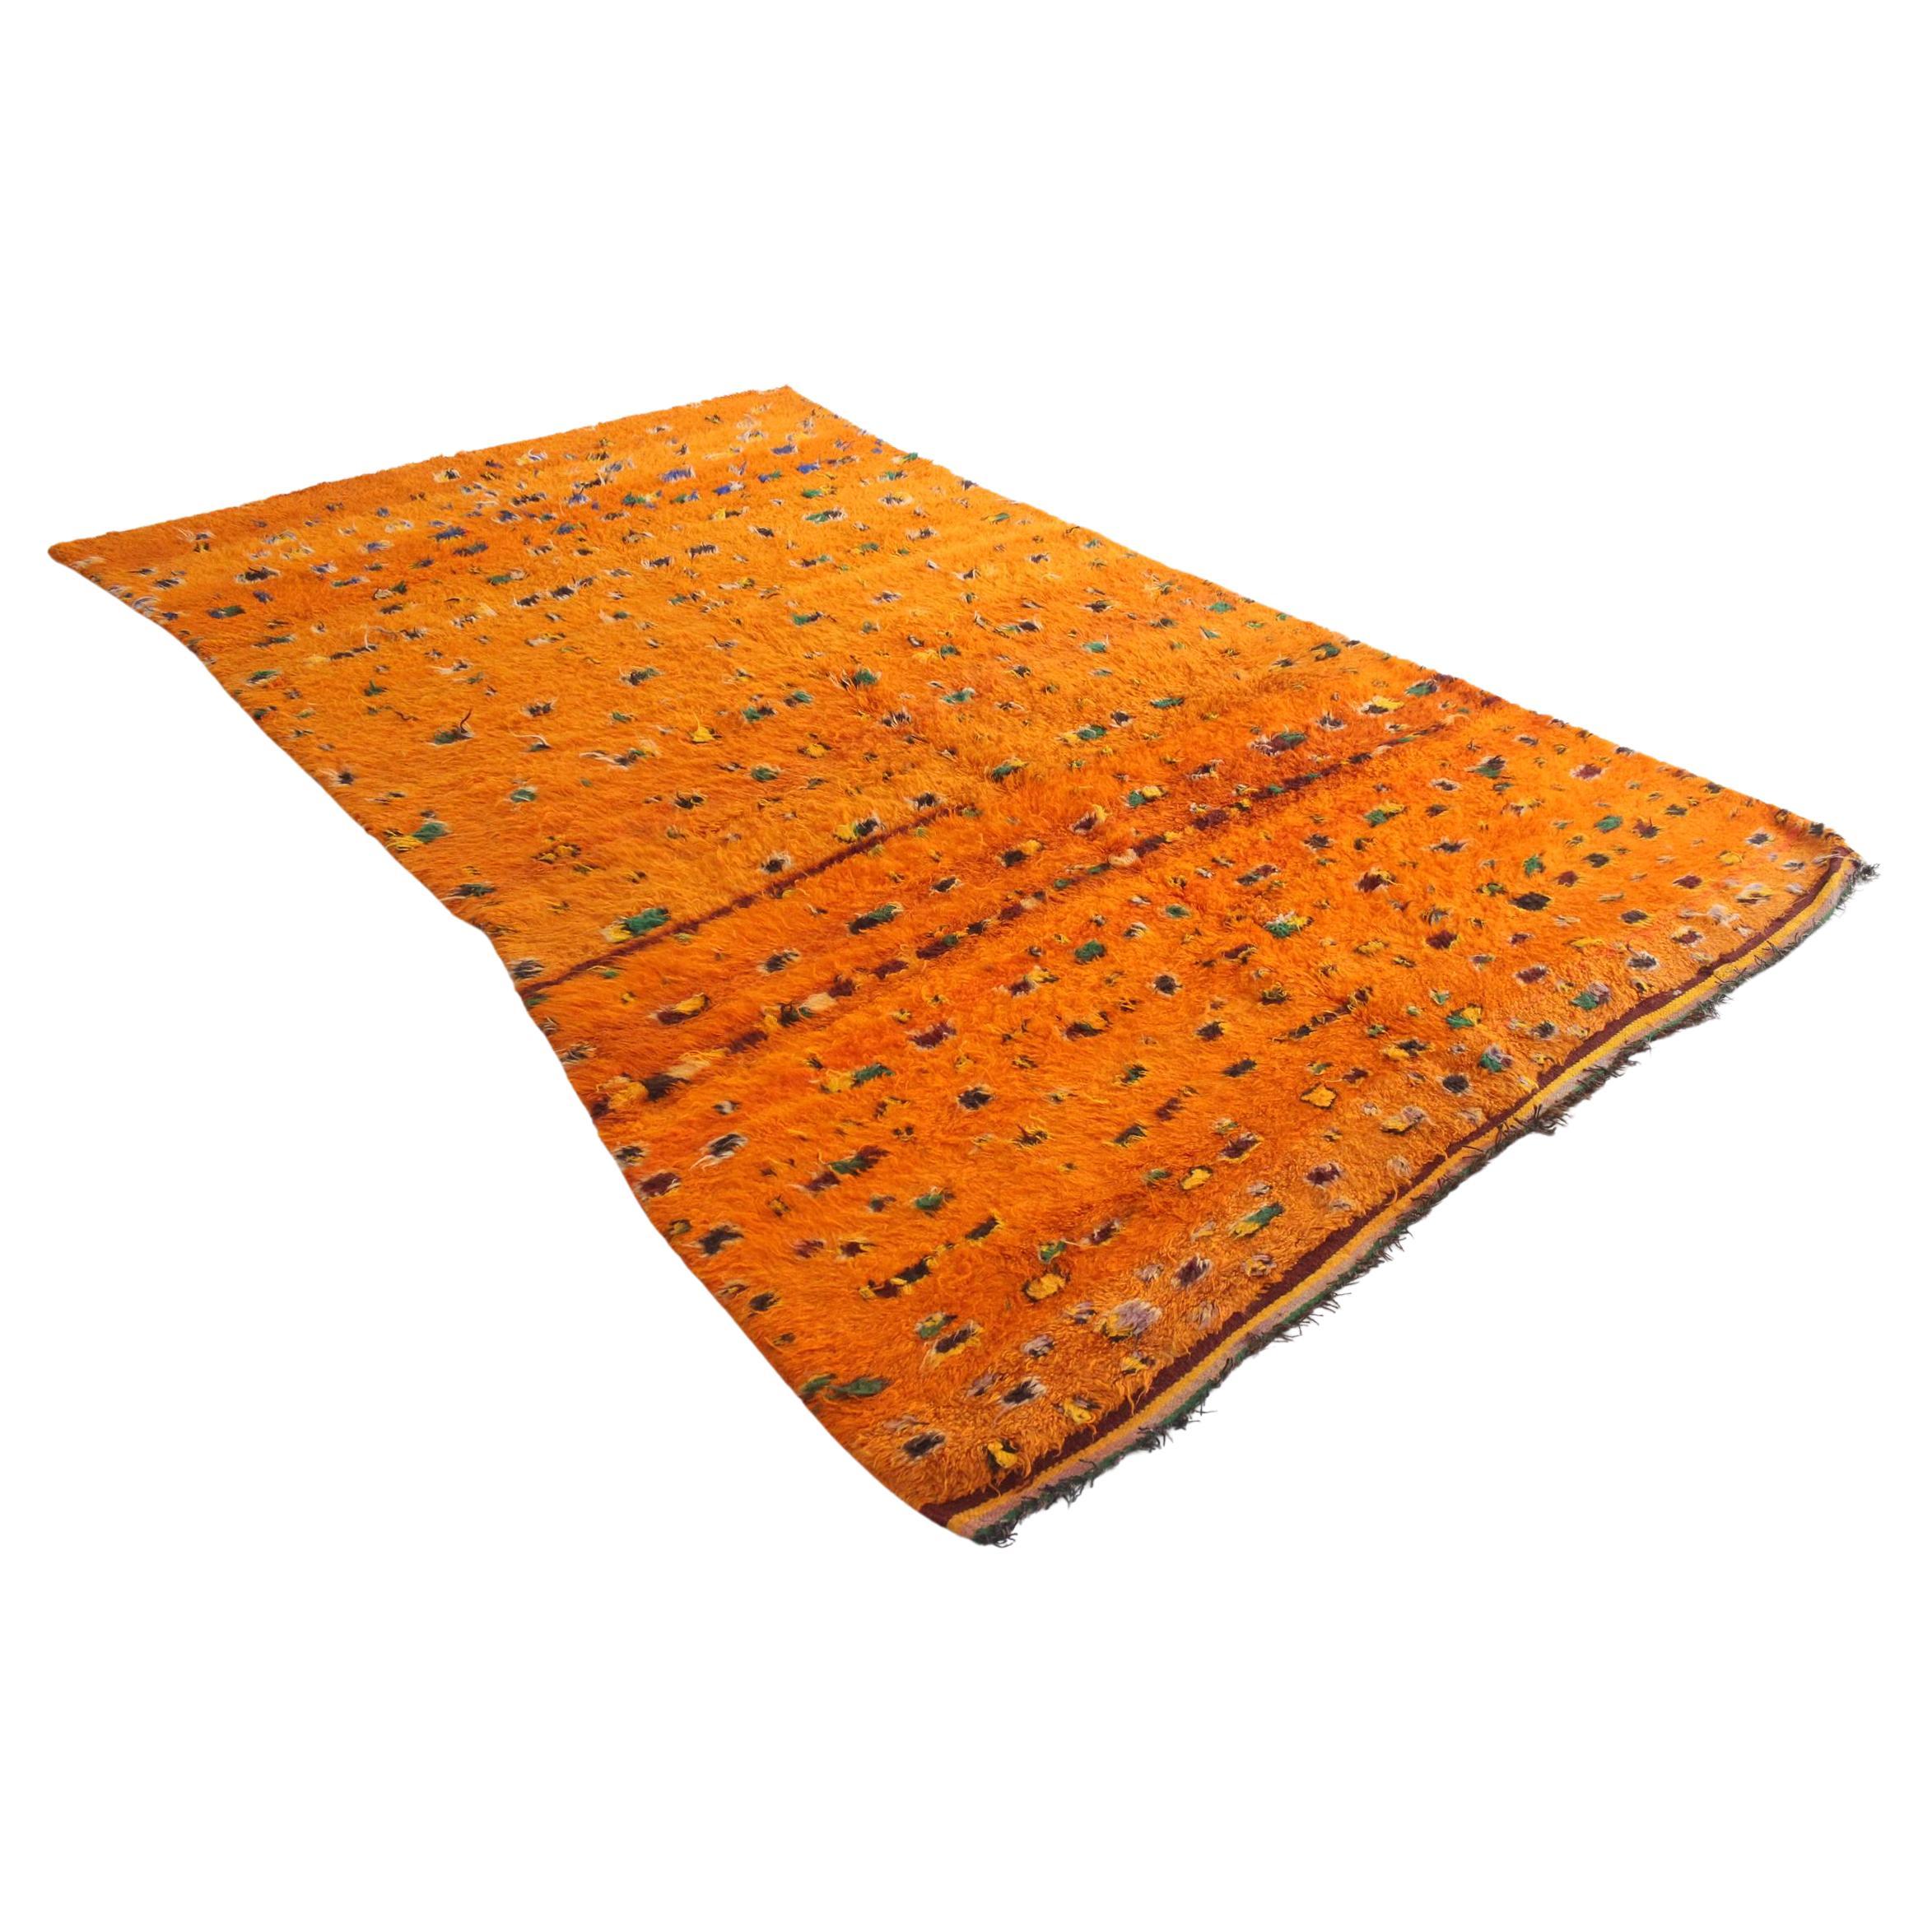 Vintage Moroccan wool rug - Orange - 6.5x10.5feet / 198x320cm For Sale